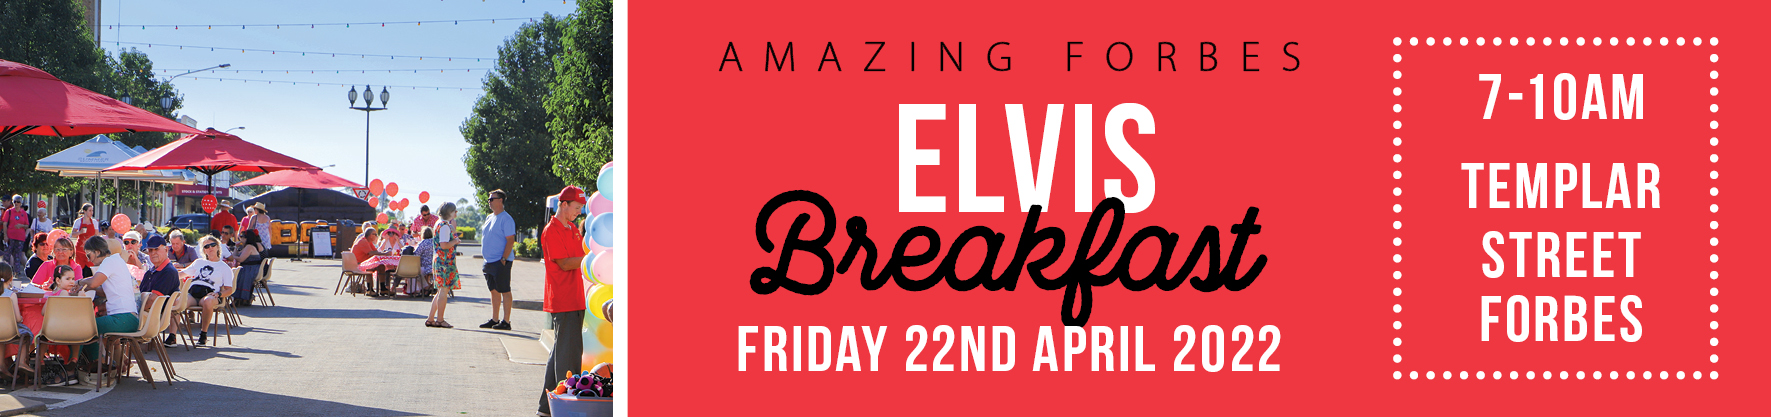 Elvis breakfast banner mirrored